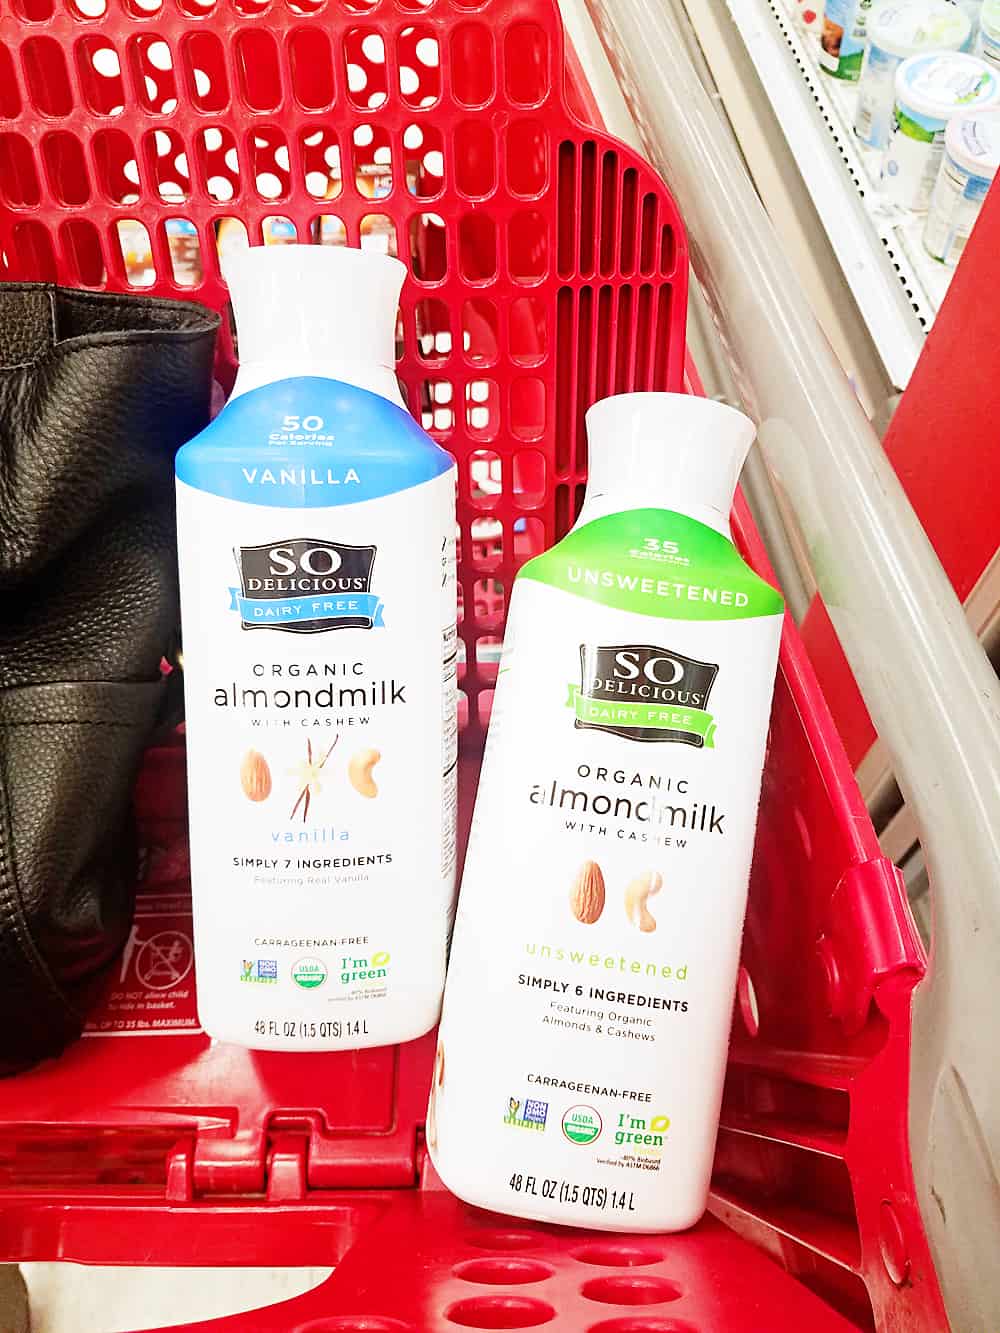 So Delicious Dairy Free Organic Almondmilk at Target